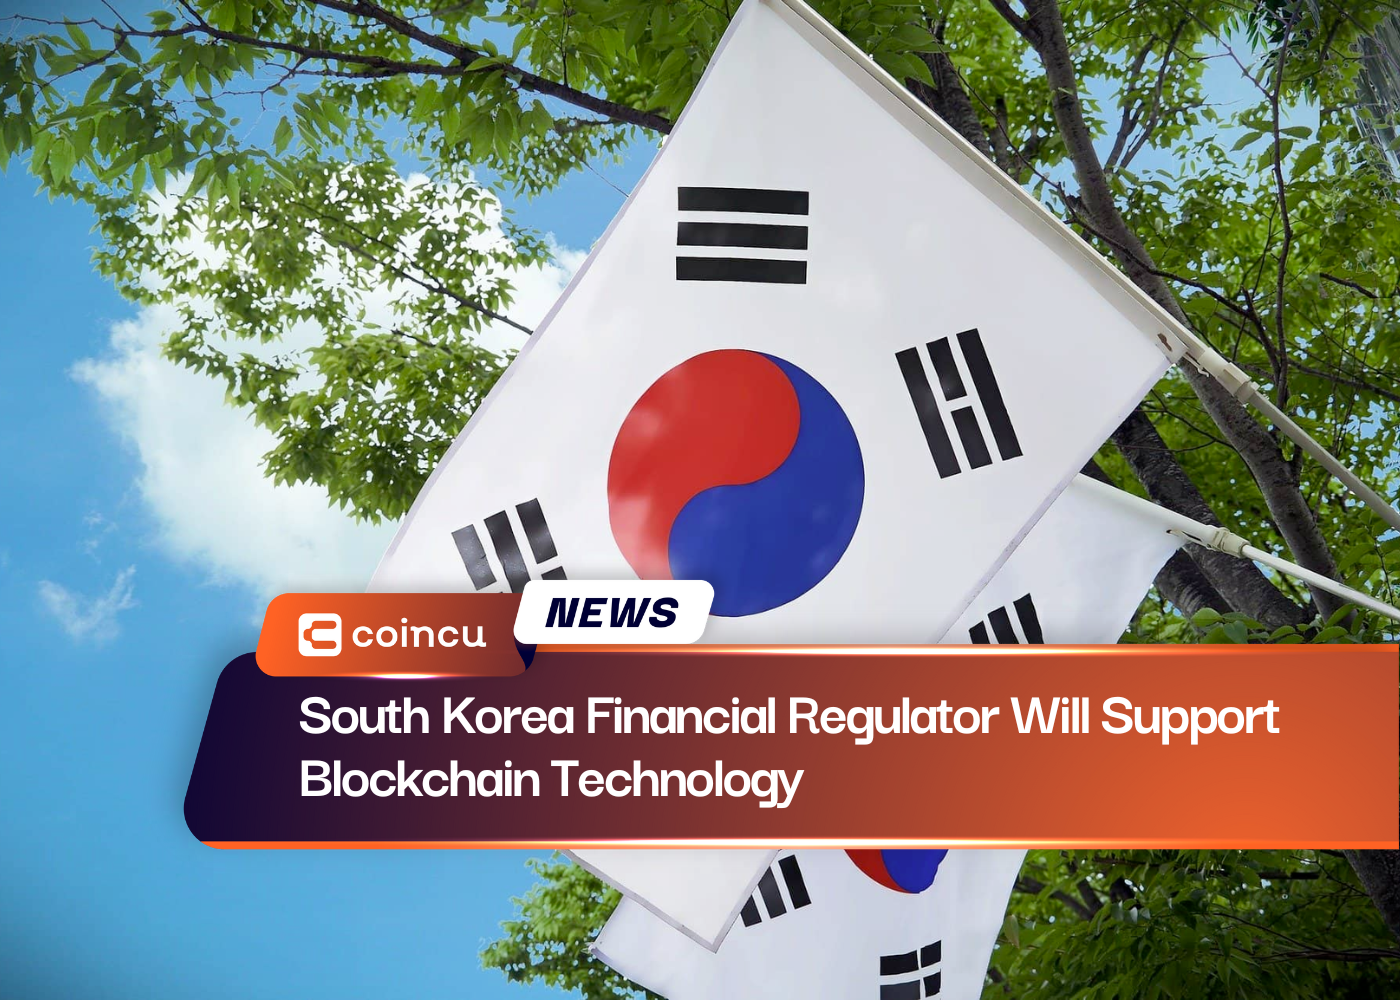 South Korea Financial Regulator Will Support Blockchain Technology